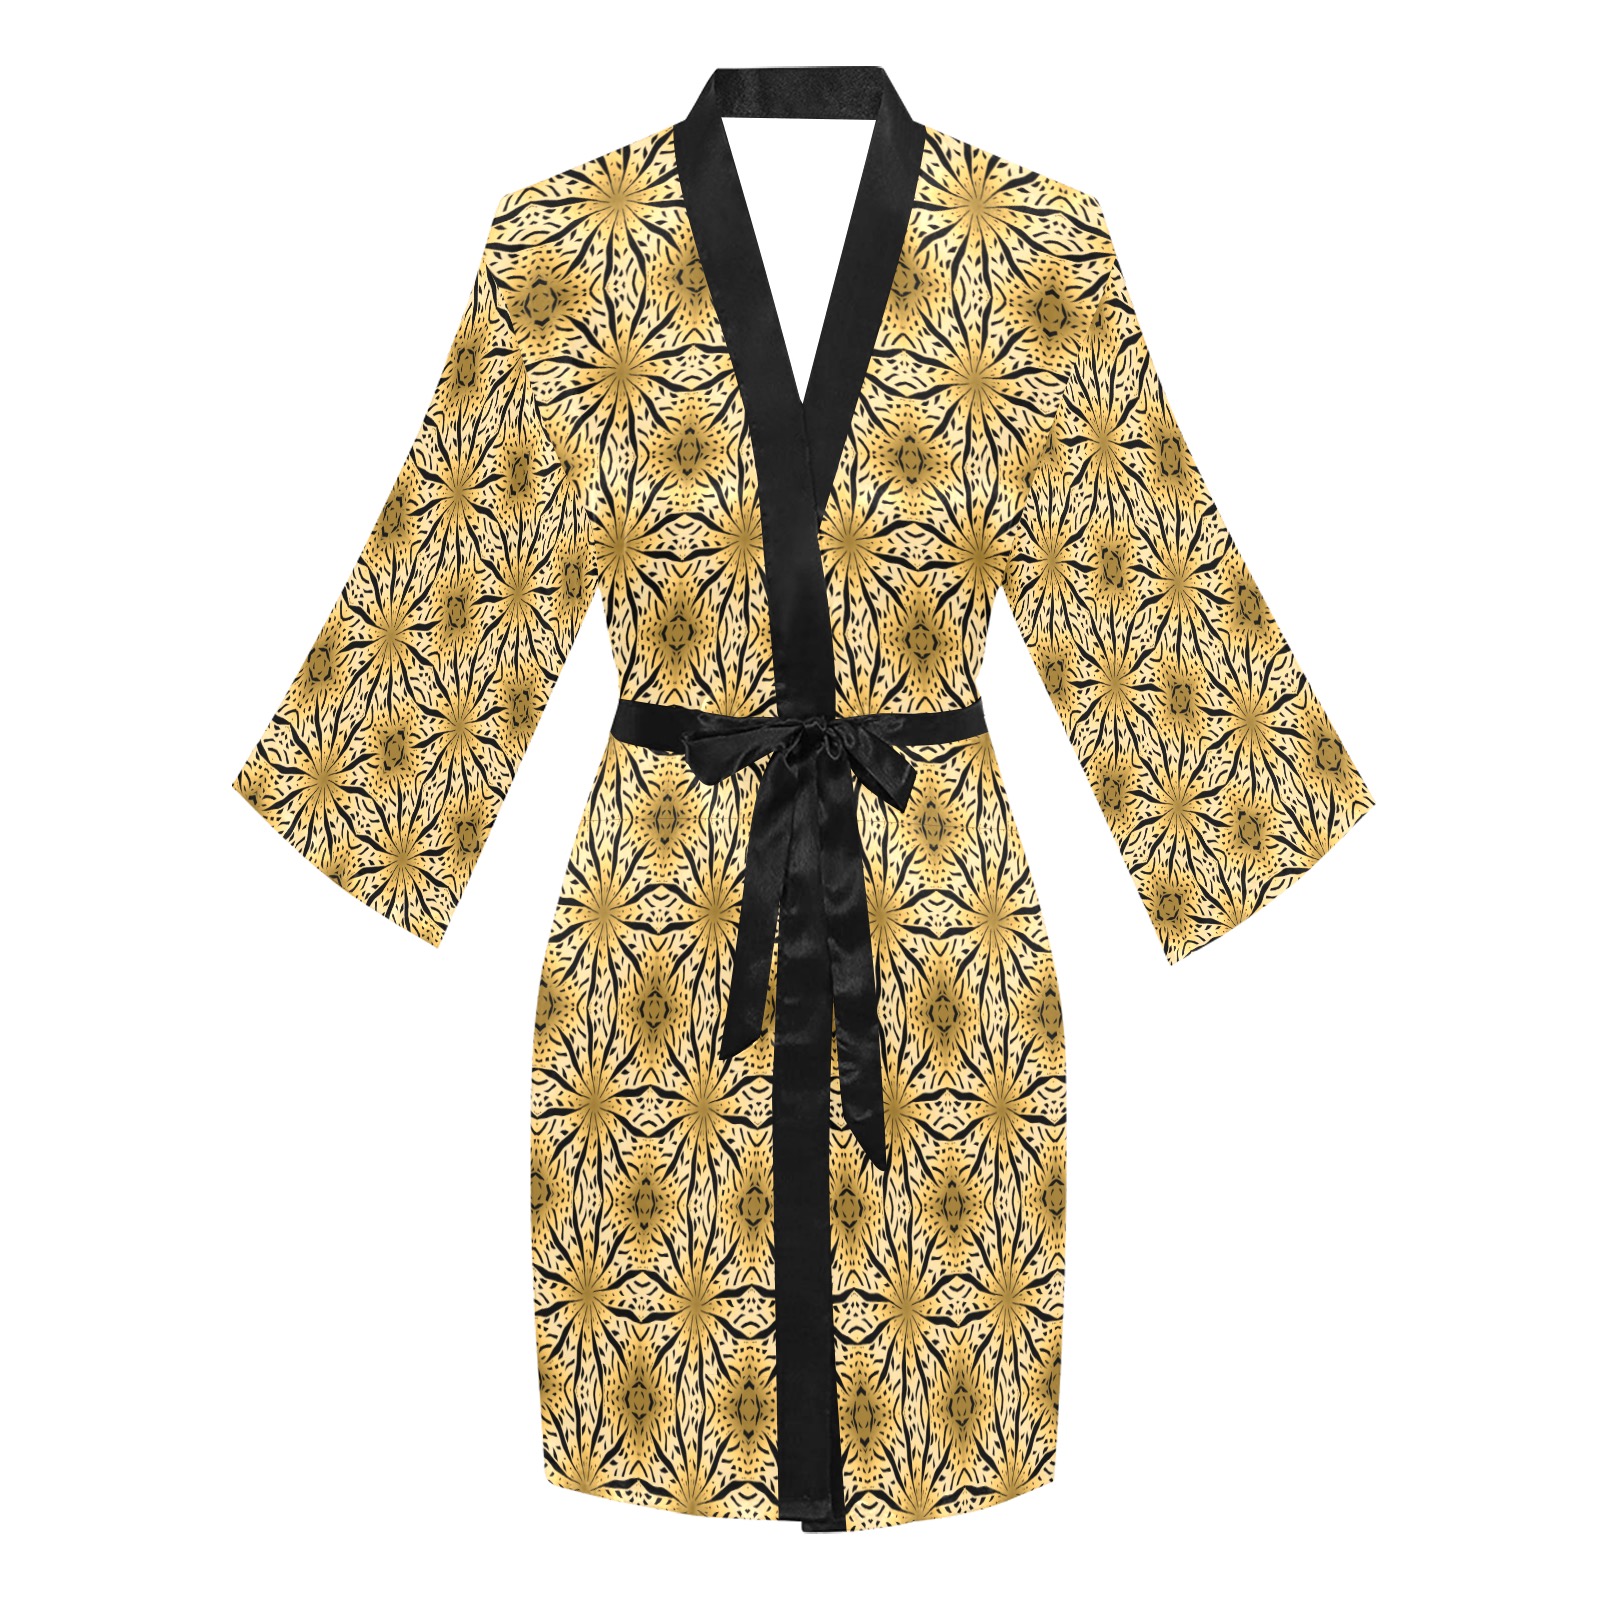 Ô Golden Mandala 40 Pattern Long Sleeve Kimono Robe